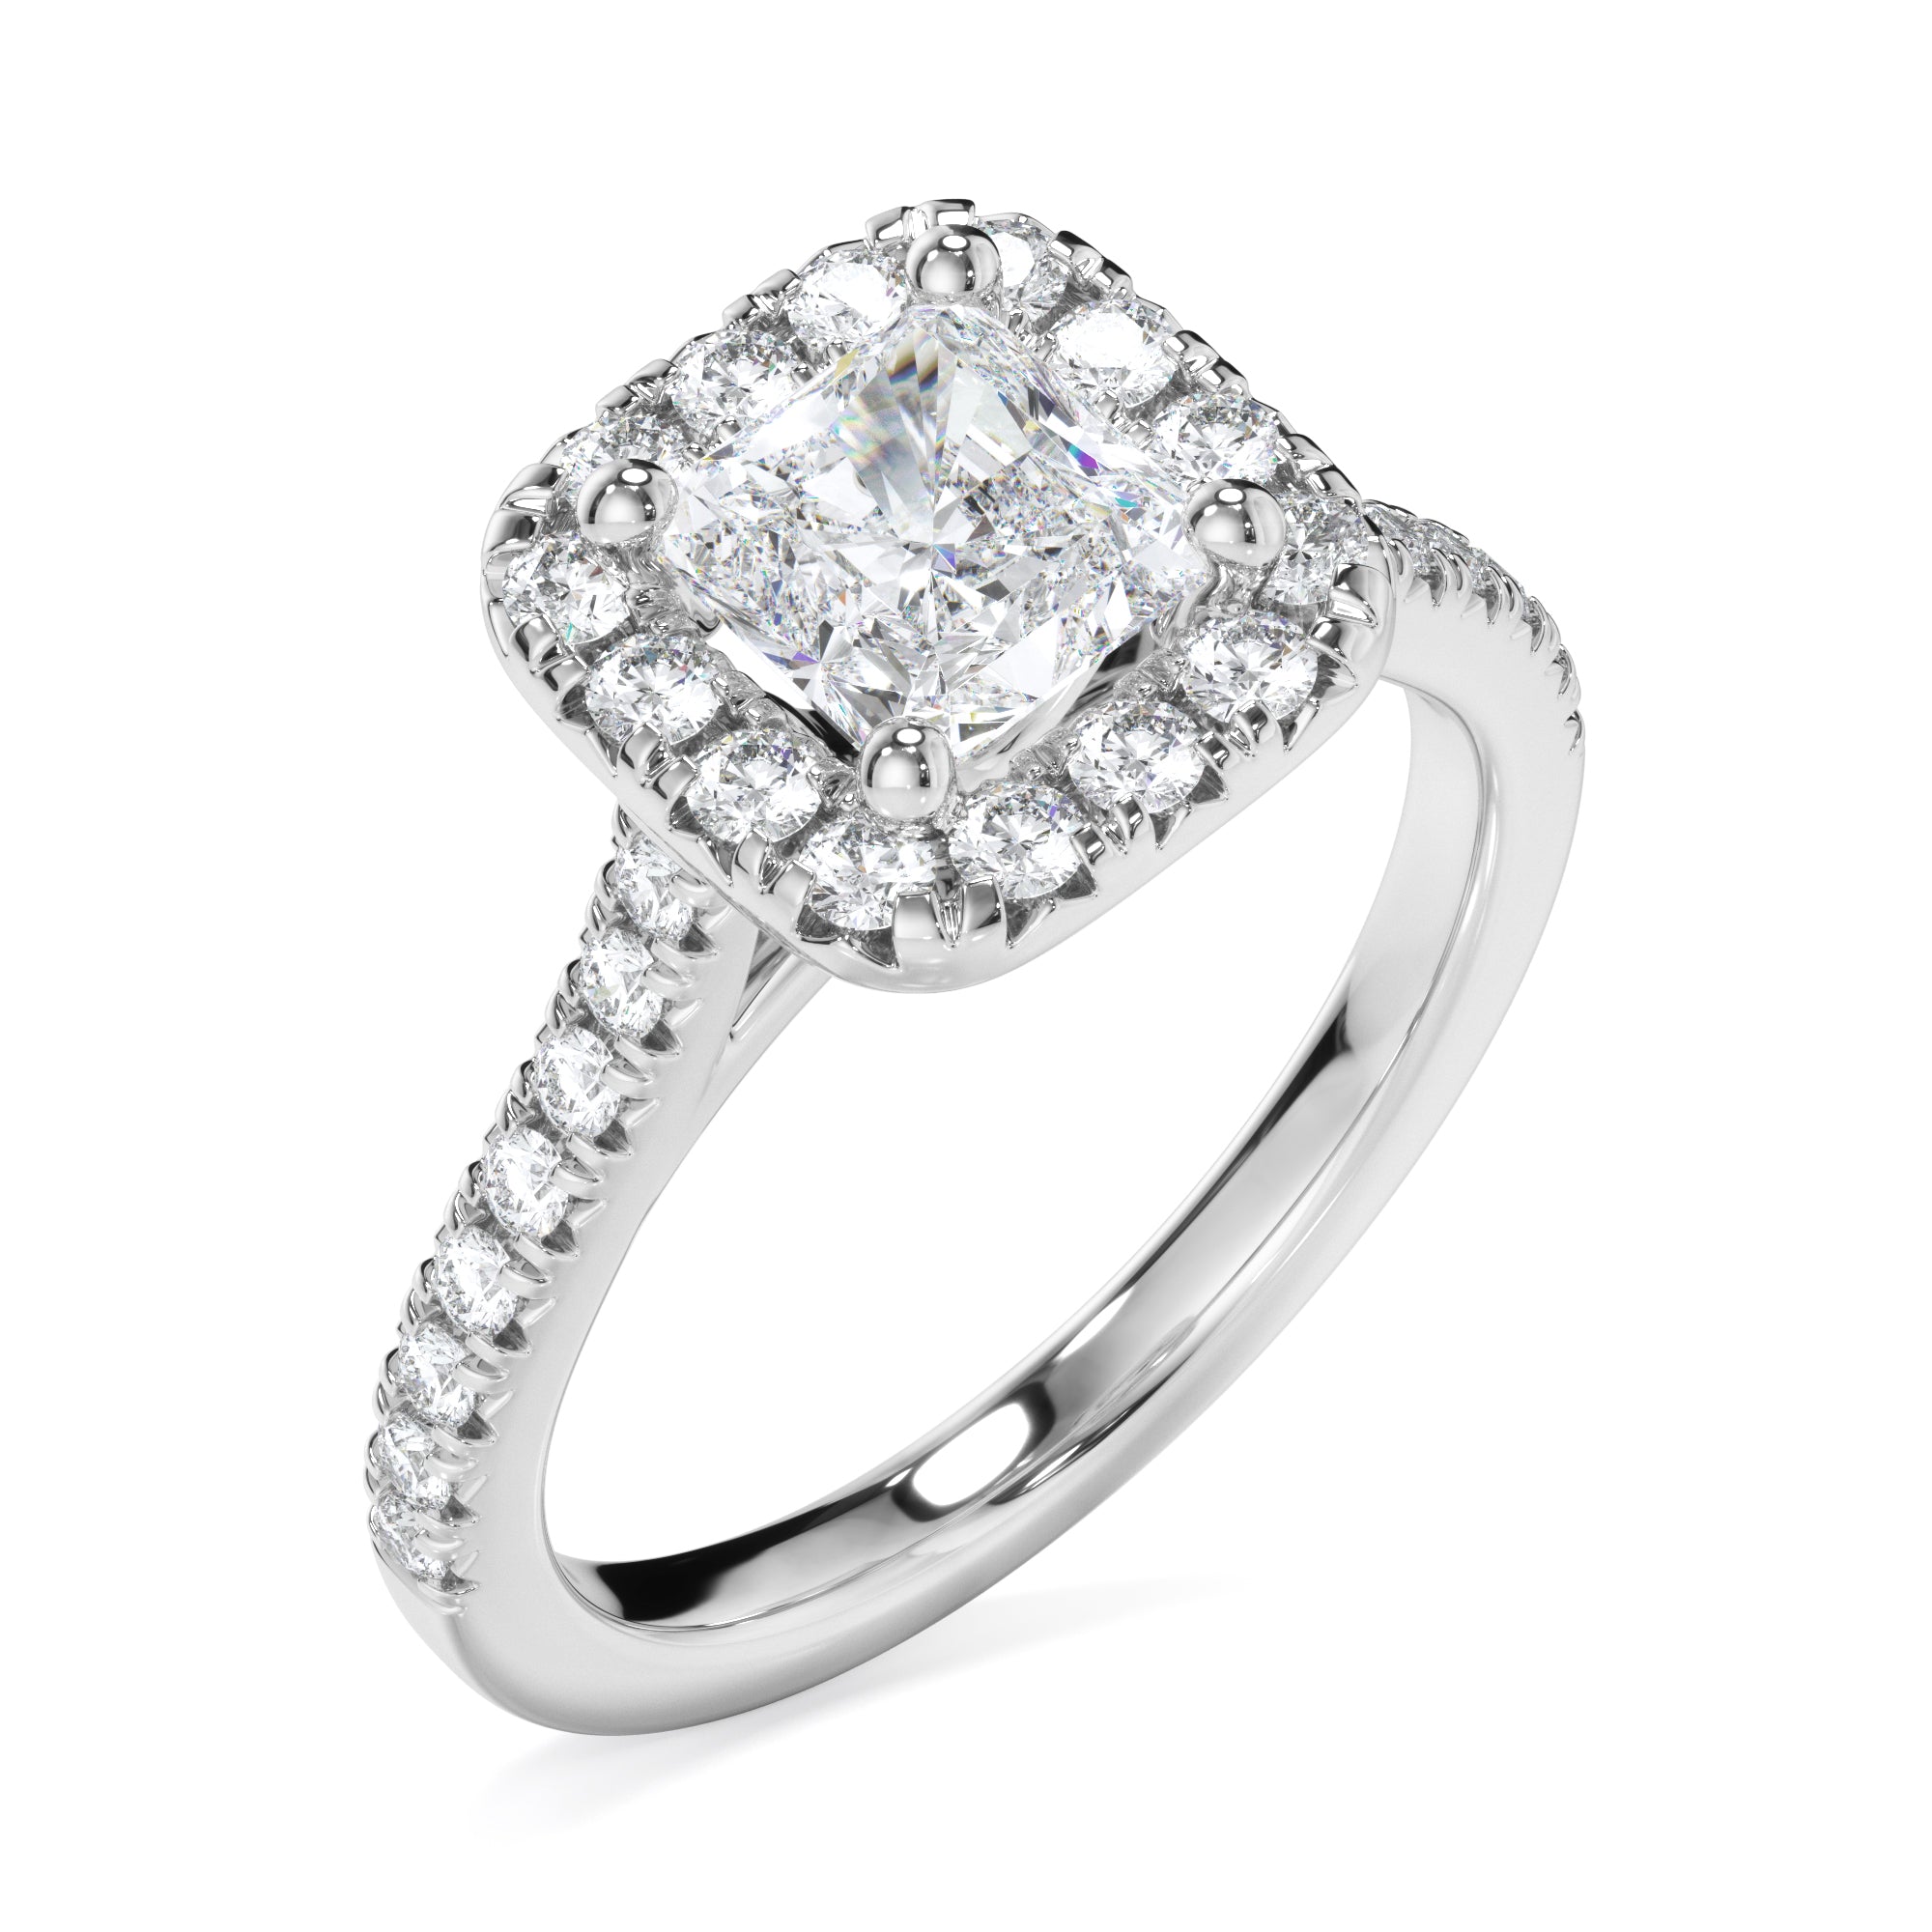 18ct White Gold Cushion Cut Halo Diamond Engagement Ring